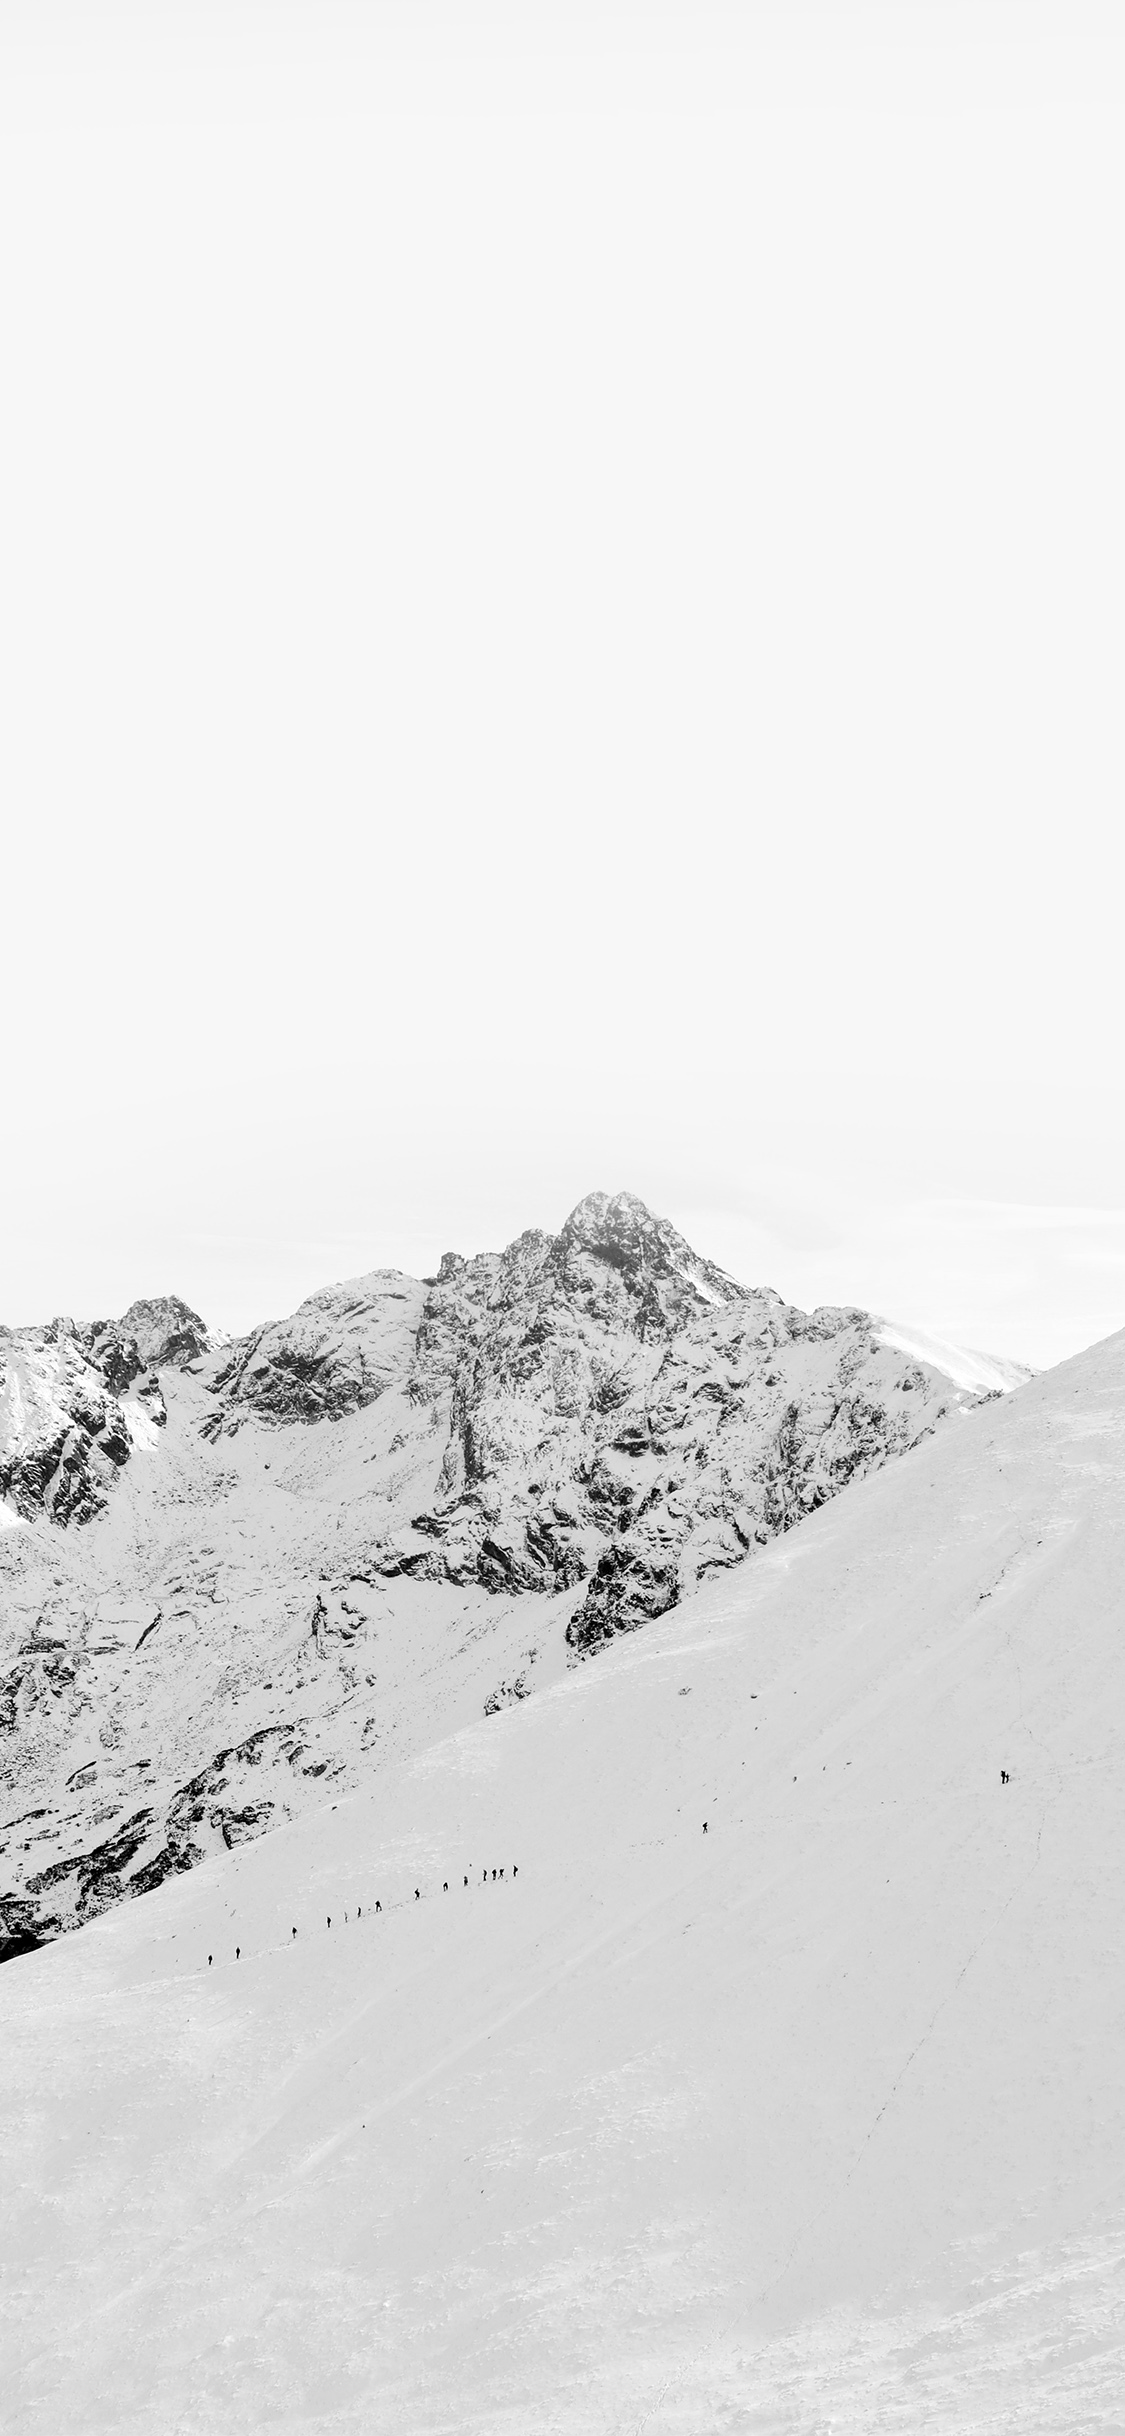 iPhone X wallpaper. winter mountain snow bw nature white